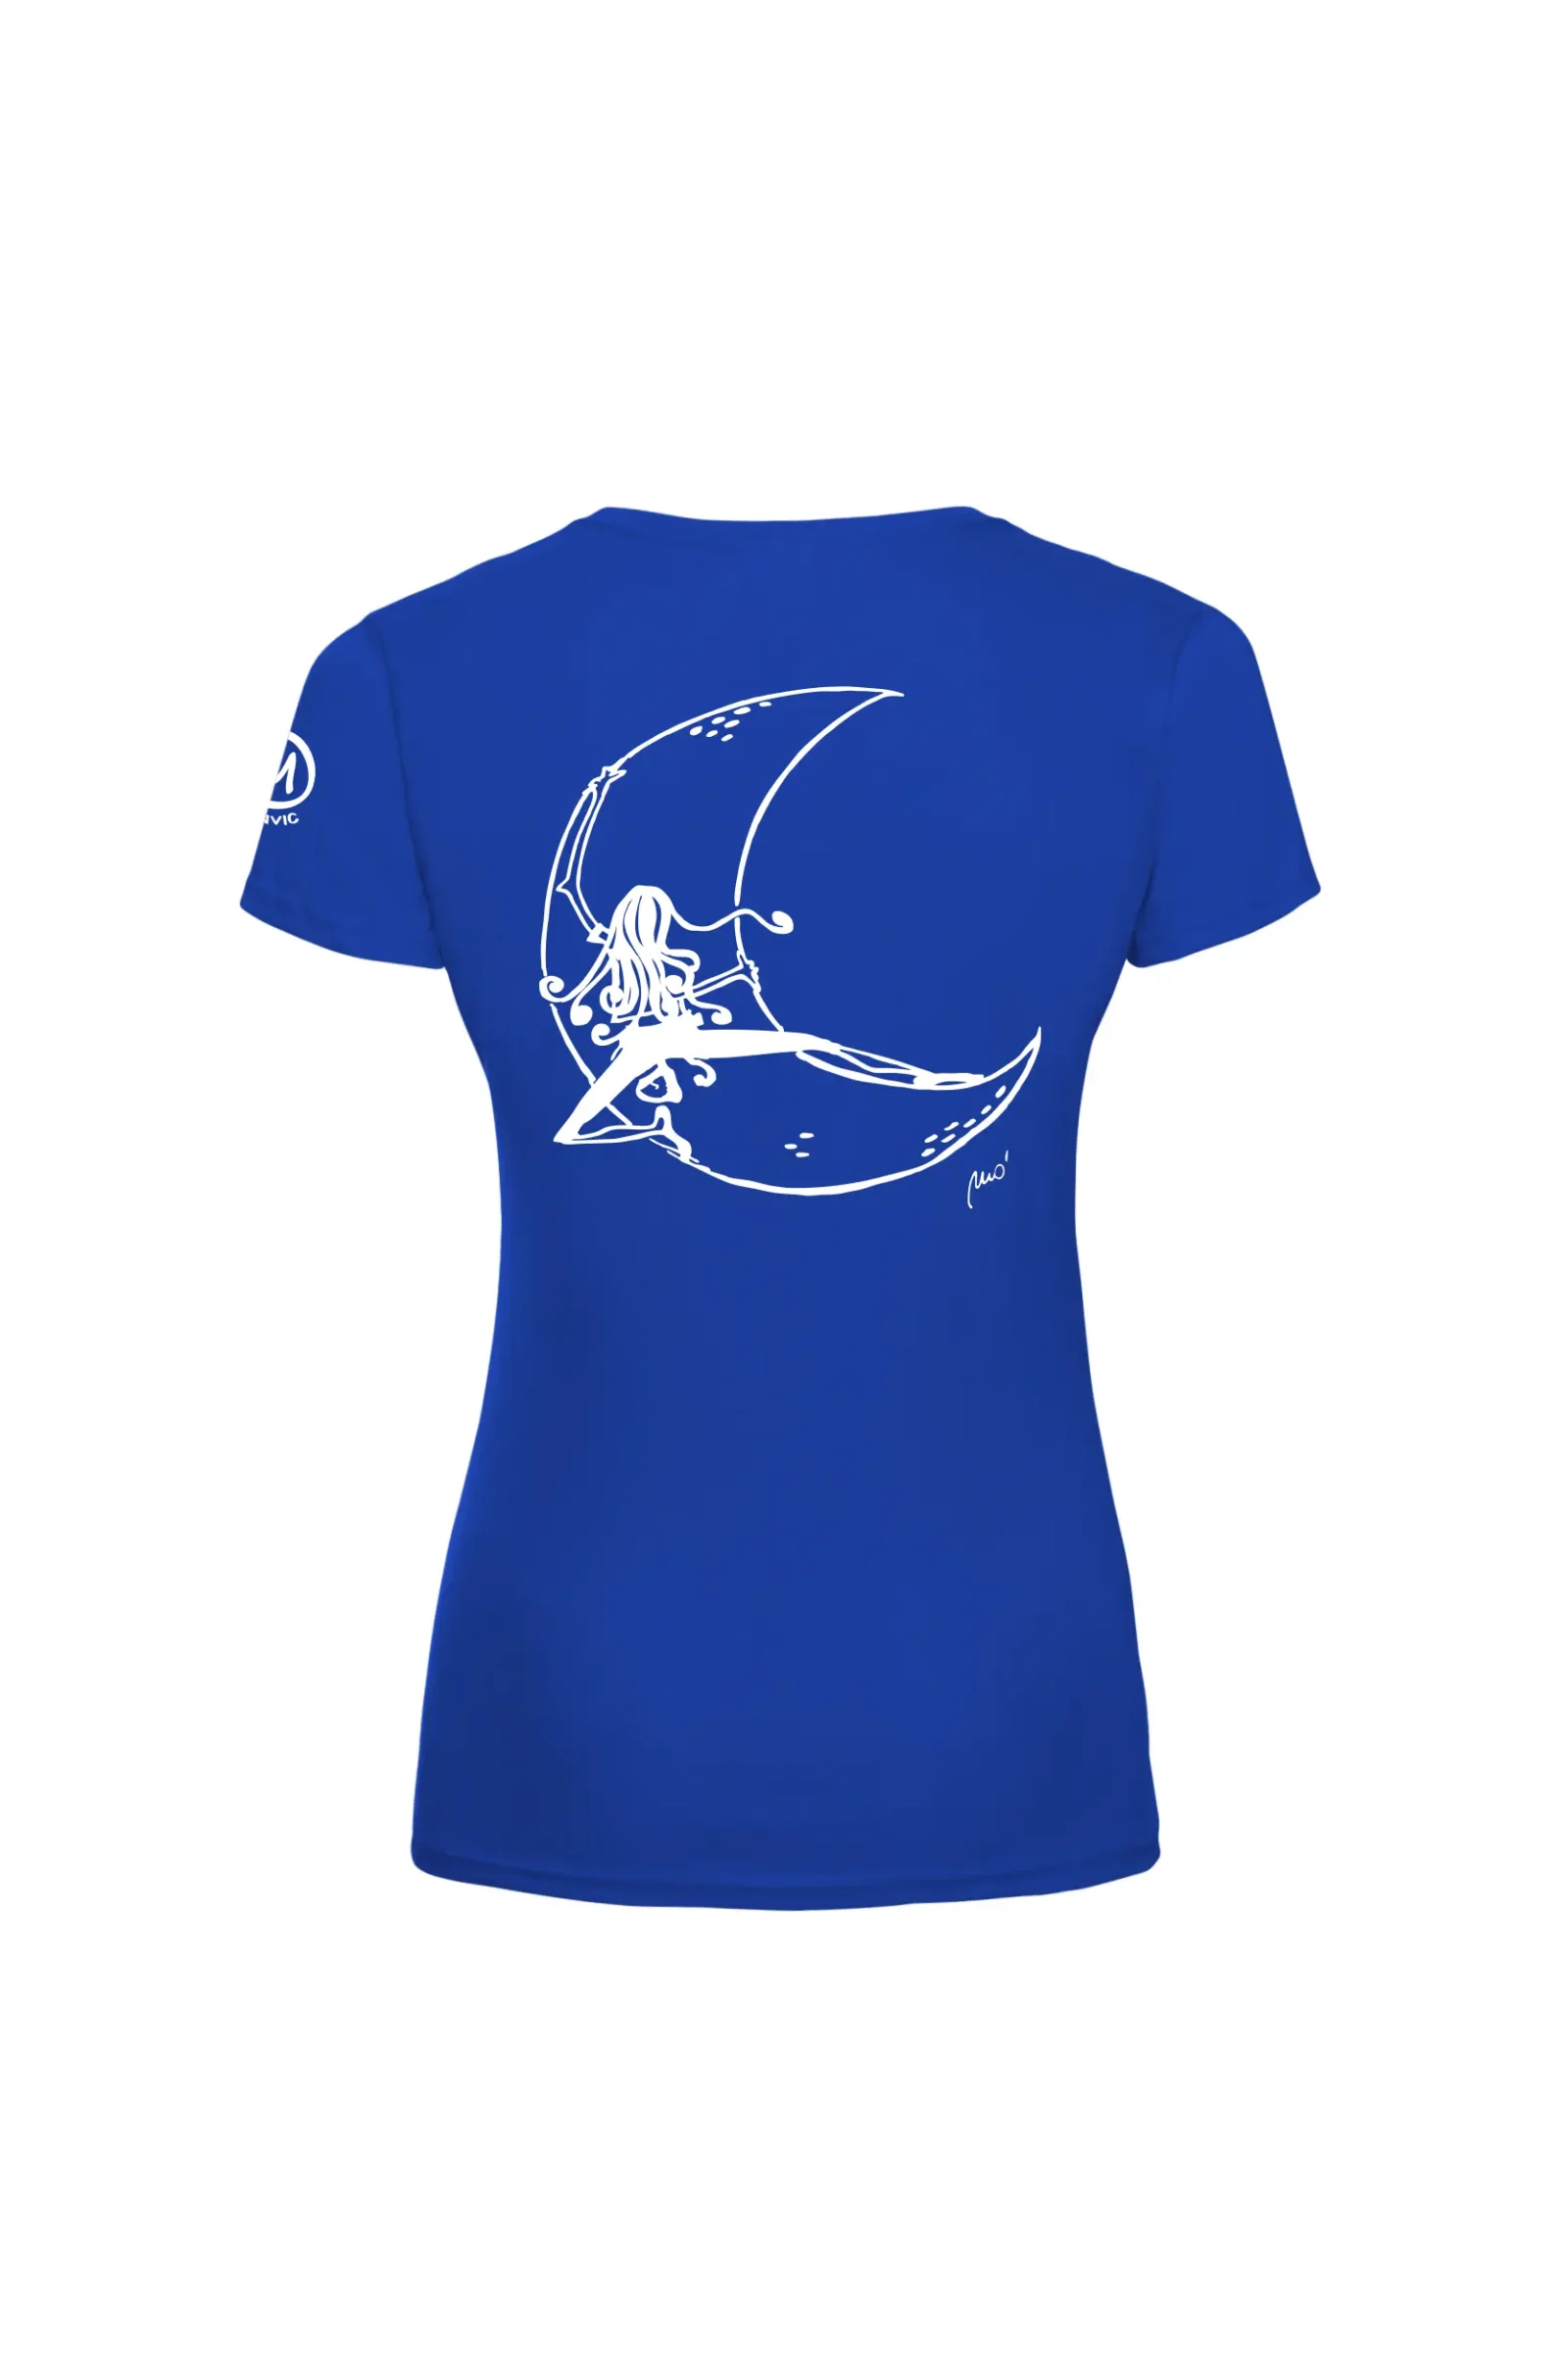 T-shirt escalade femme - coton bleu roi - graphisme "Lune" - SHARON by MONVIC